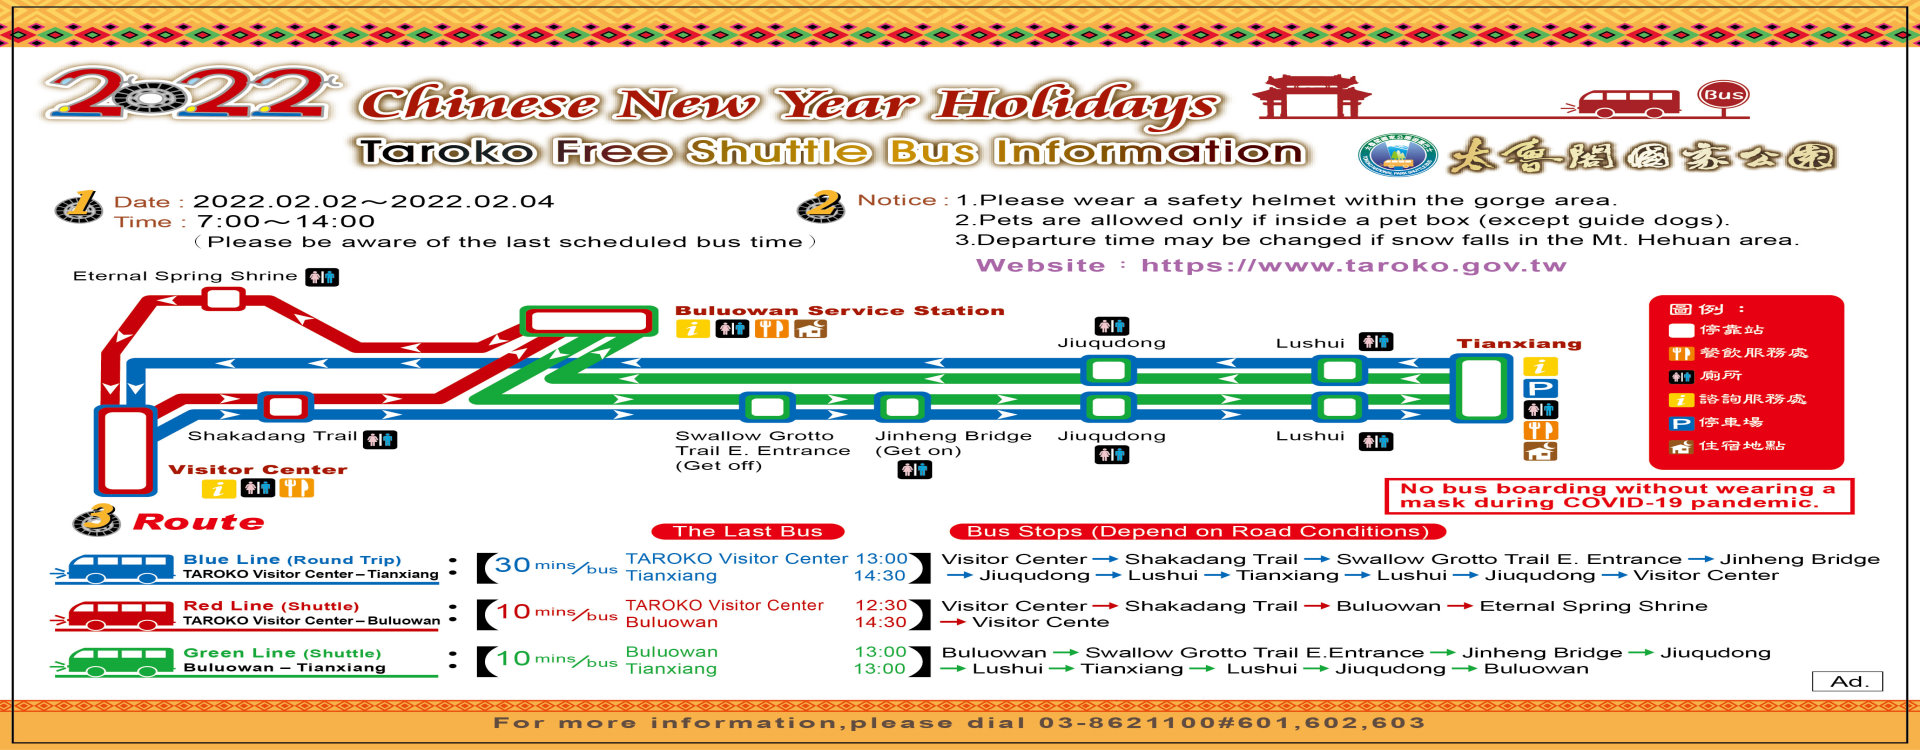 2022 Chinese New Year Taroko free Shuttle Bus Information